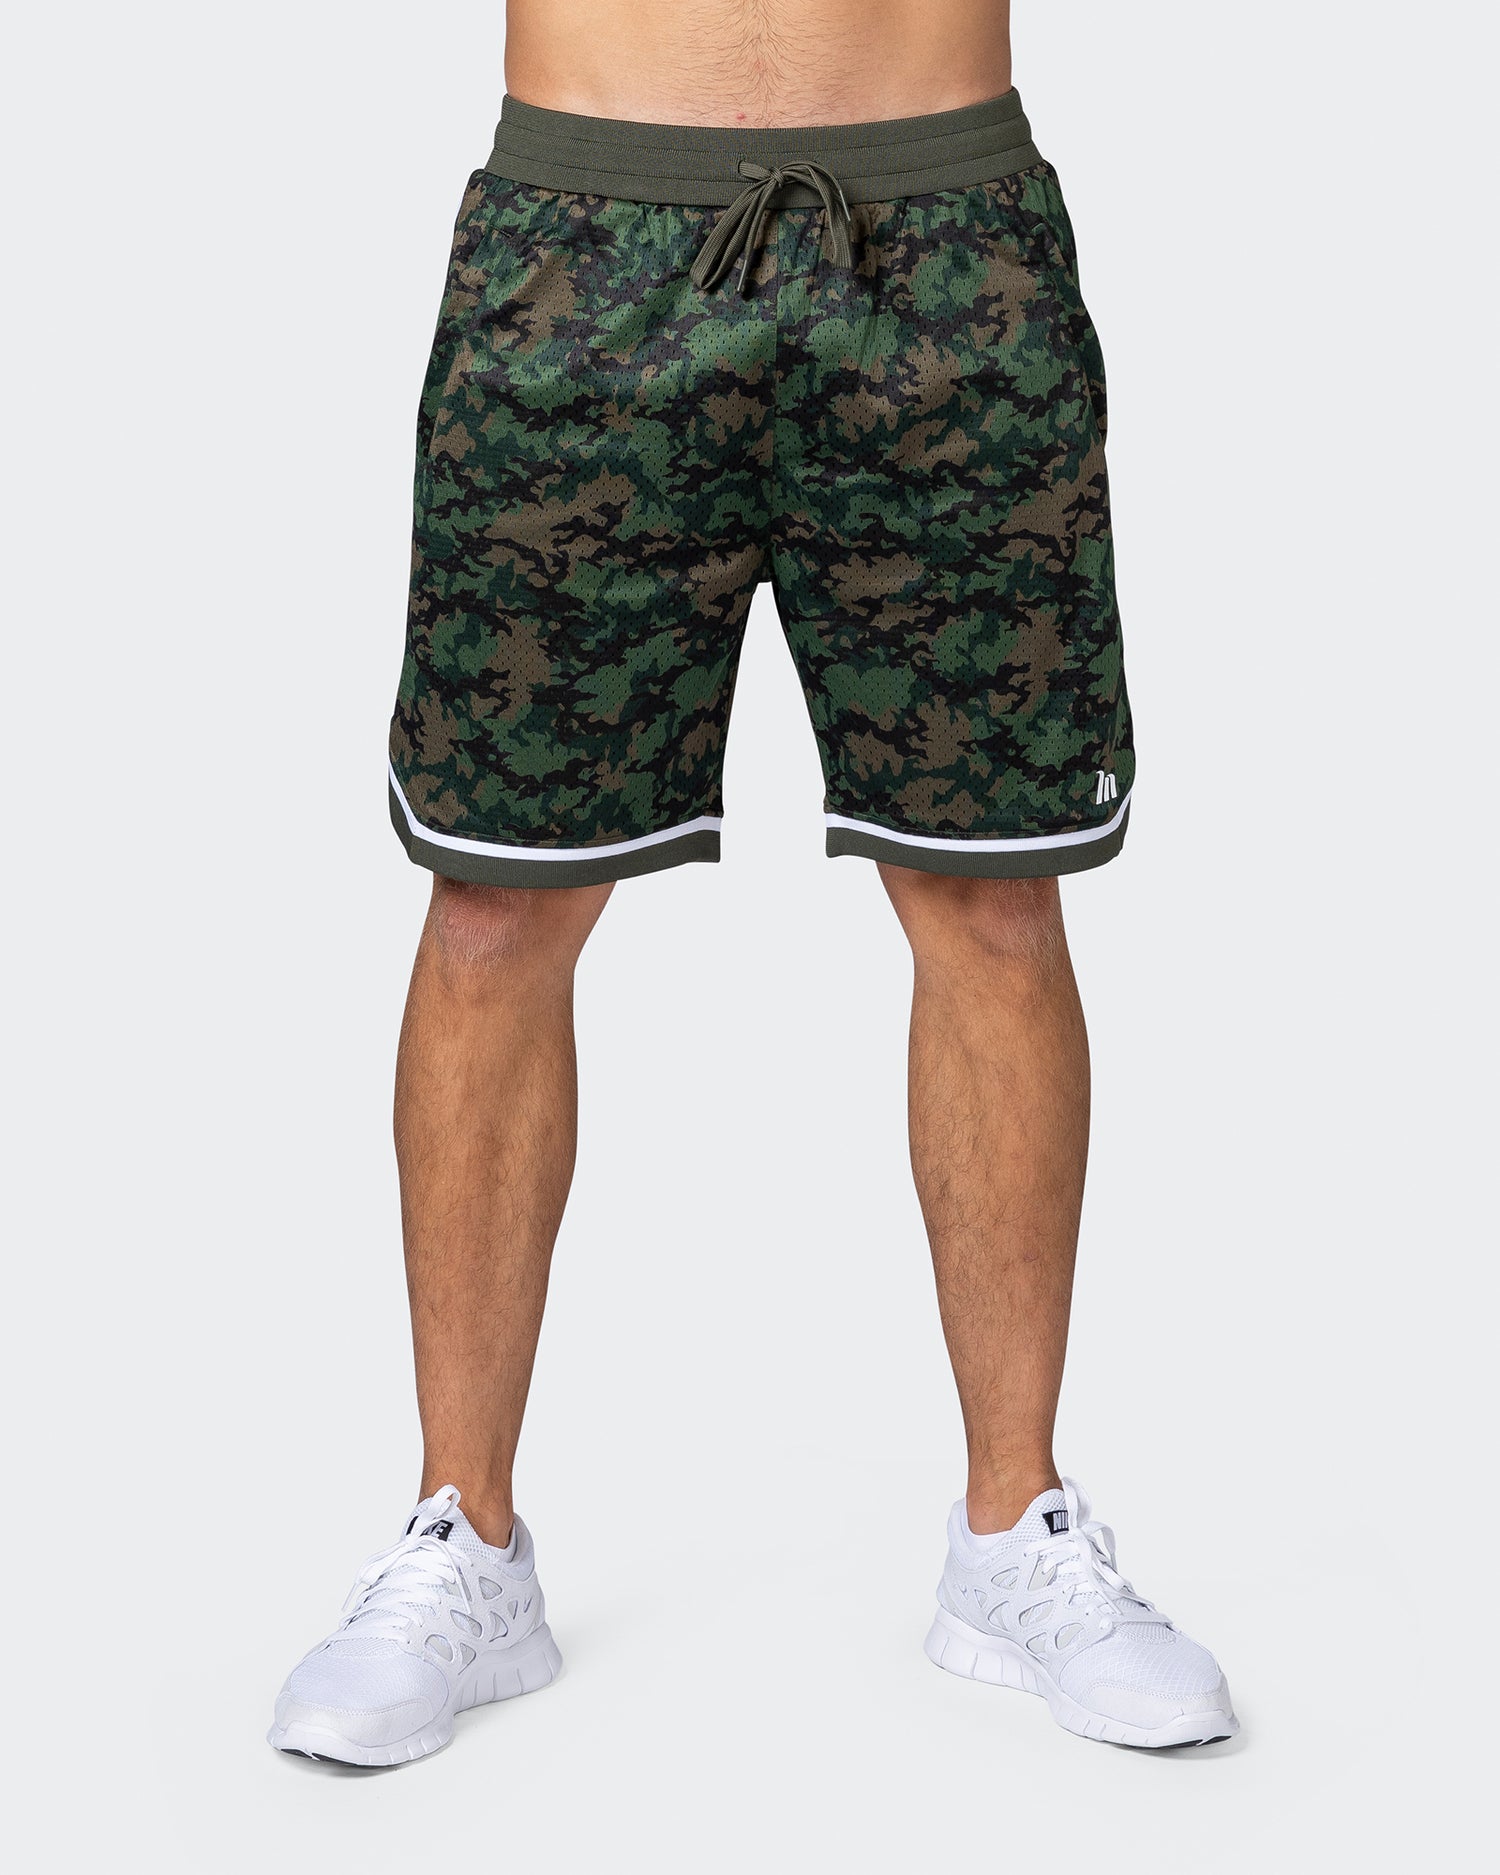 8" Basketball Shorts - Dark Khaki Camo Print